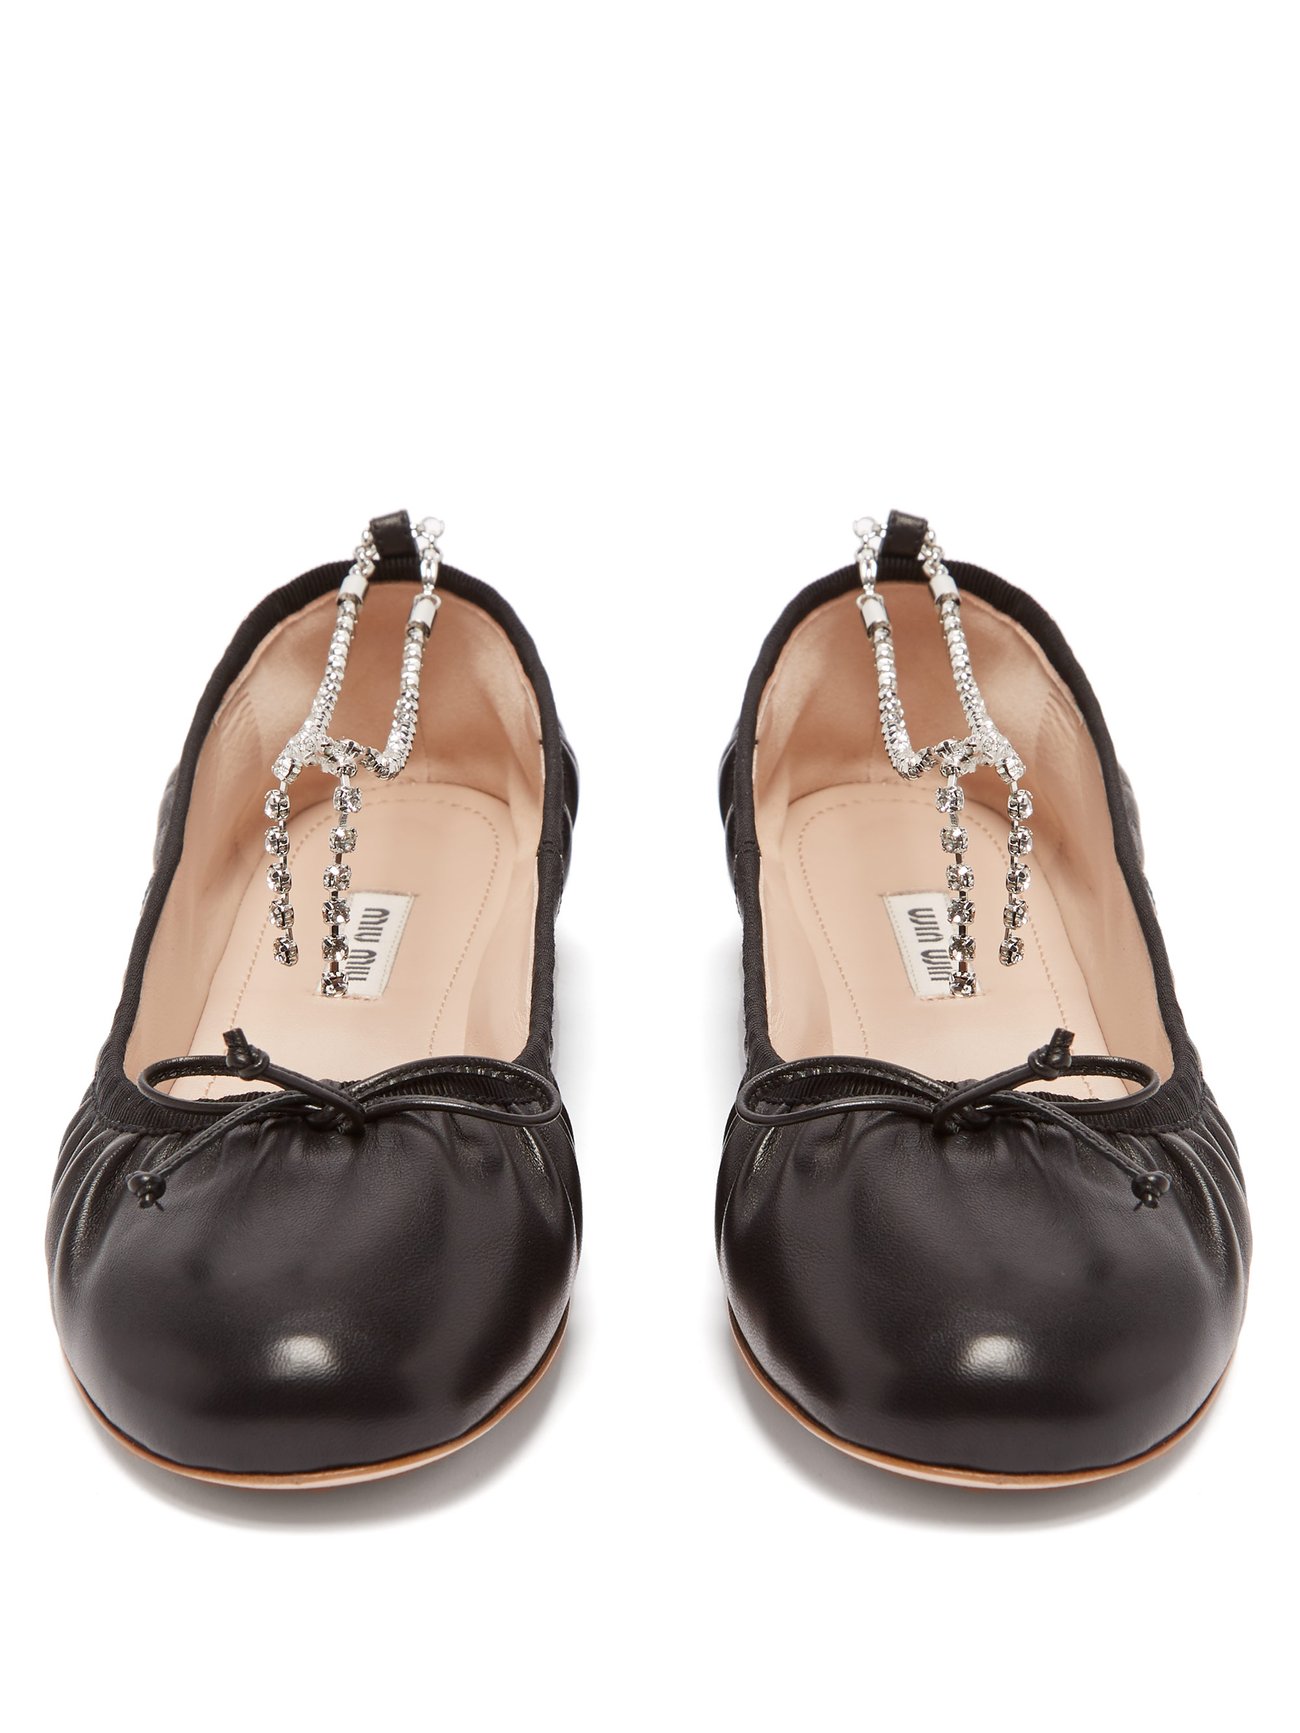 Miu Miu Black Patent Leather Bow Crystal Embellished Ballet Flats Size 40.5 Miu  Miu